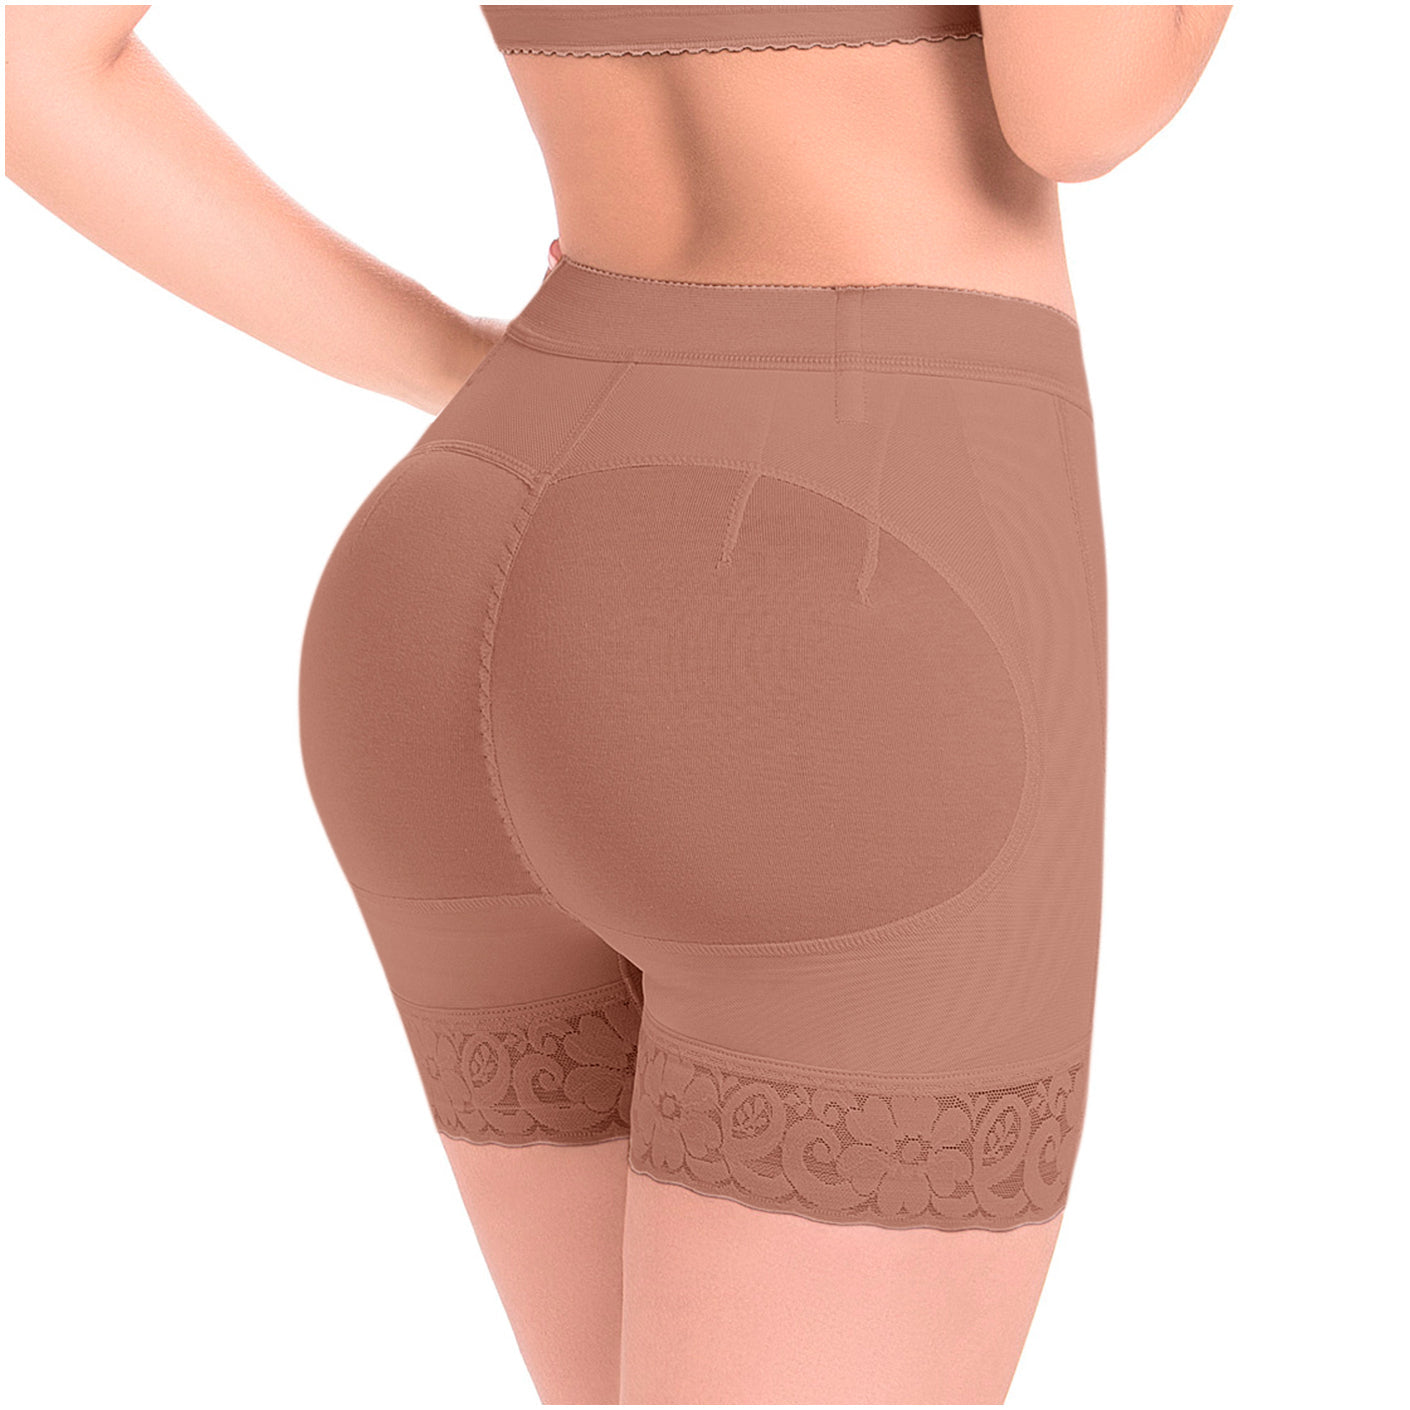 Fajas MariaE FU101 - High-Waisted Tummy Control Shorts for Women